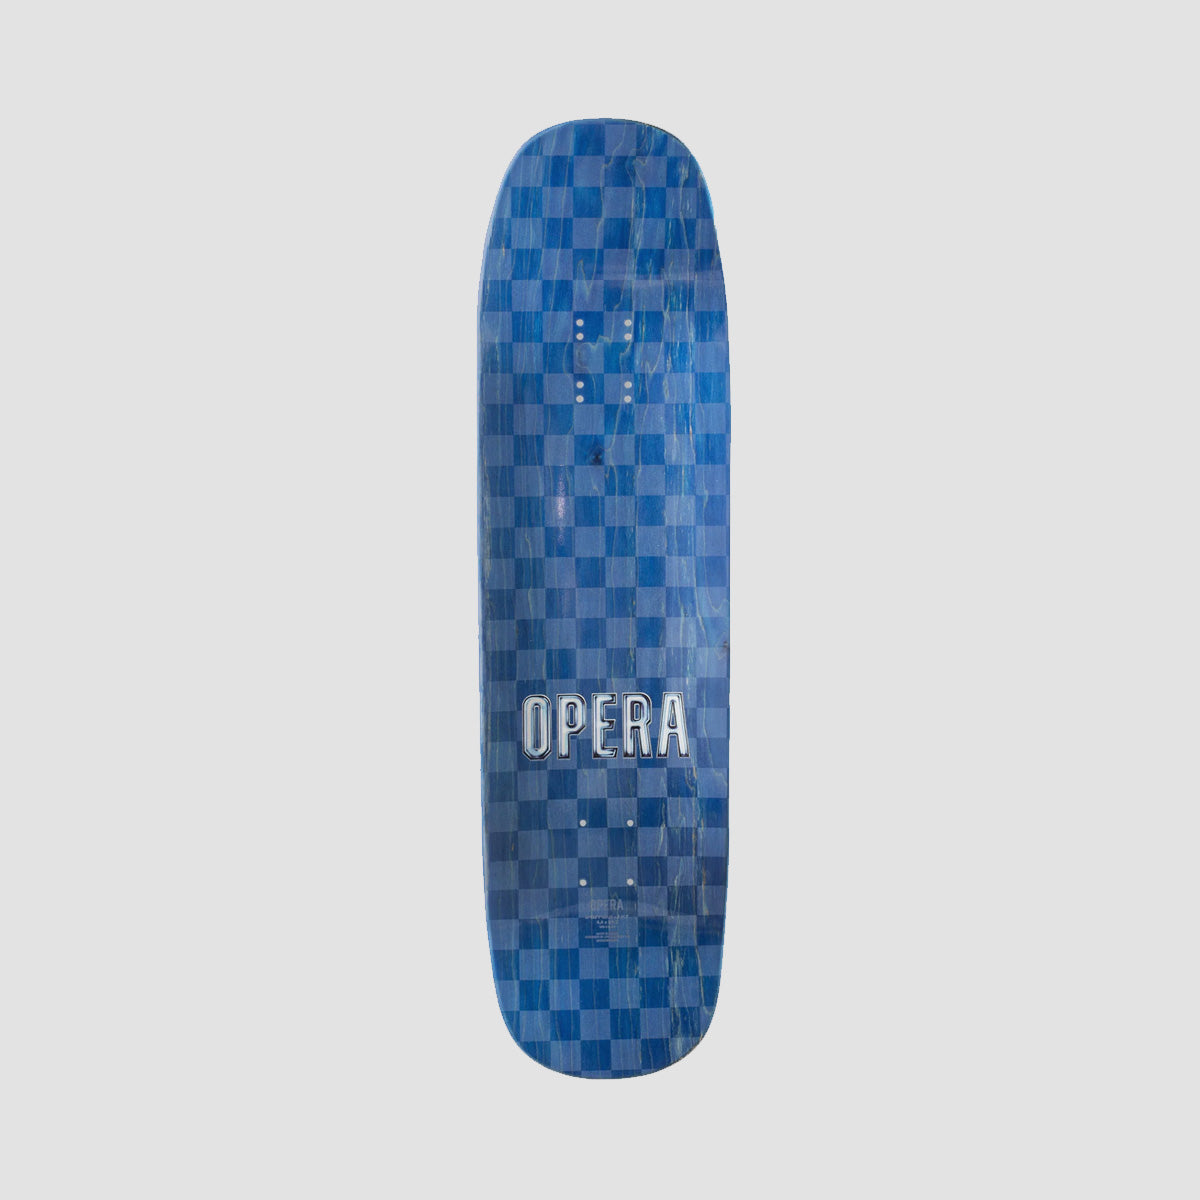 Opera Sam Beckett Dover Ex7 Skateboard Deck White - 8.75"